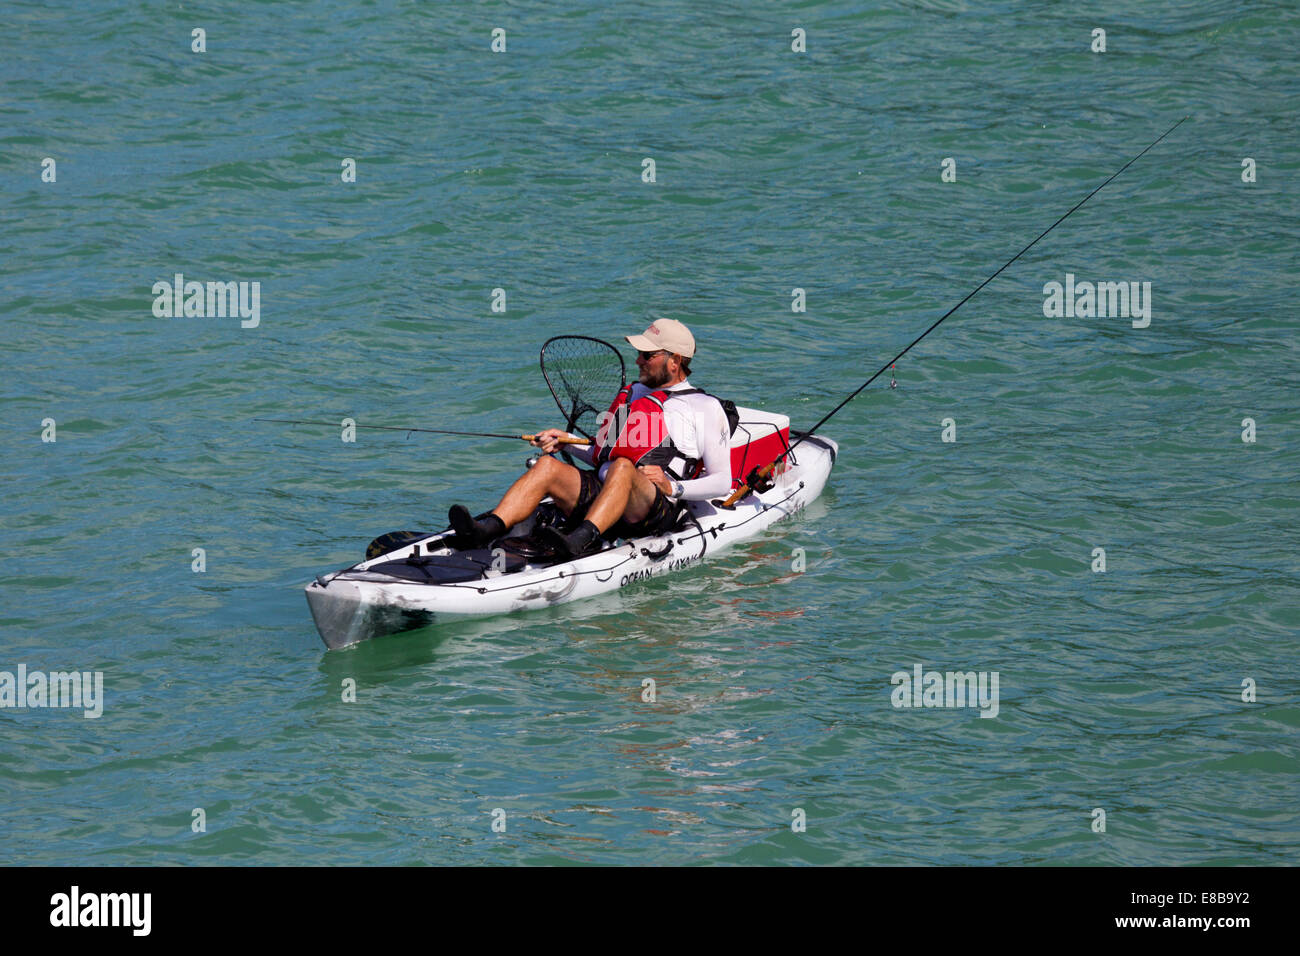 https://c8.alamy.com/comp/E8B9Y2/man-fishing-from-ocean-kayak-E8B9Y2.jpg